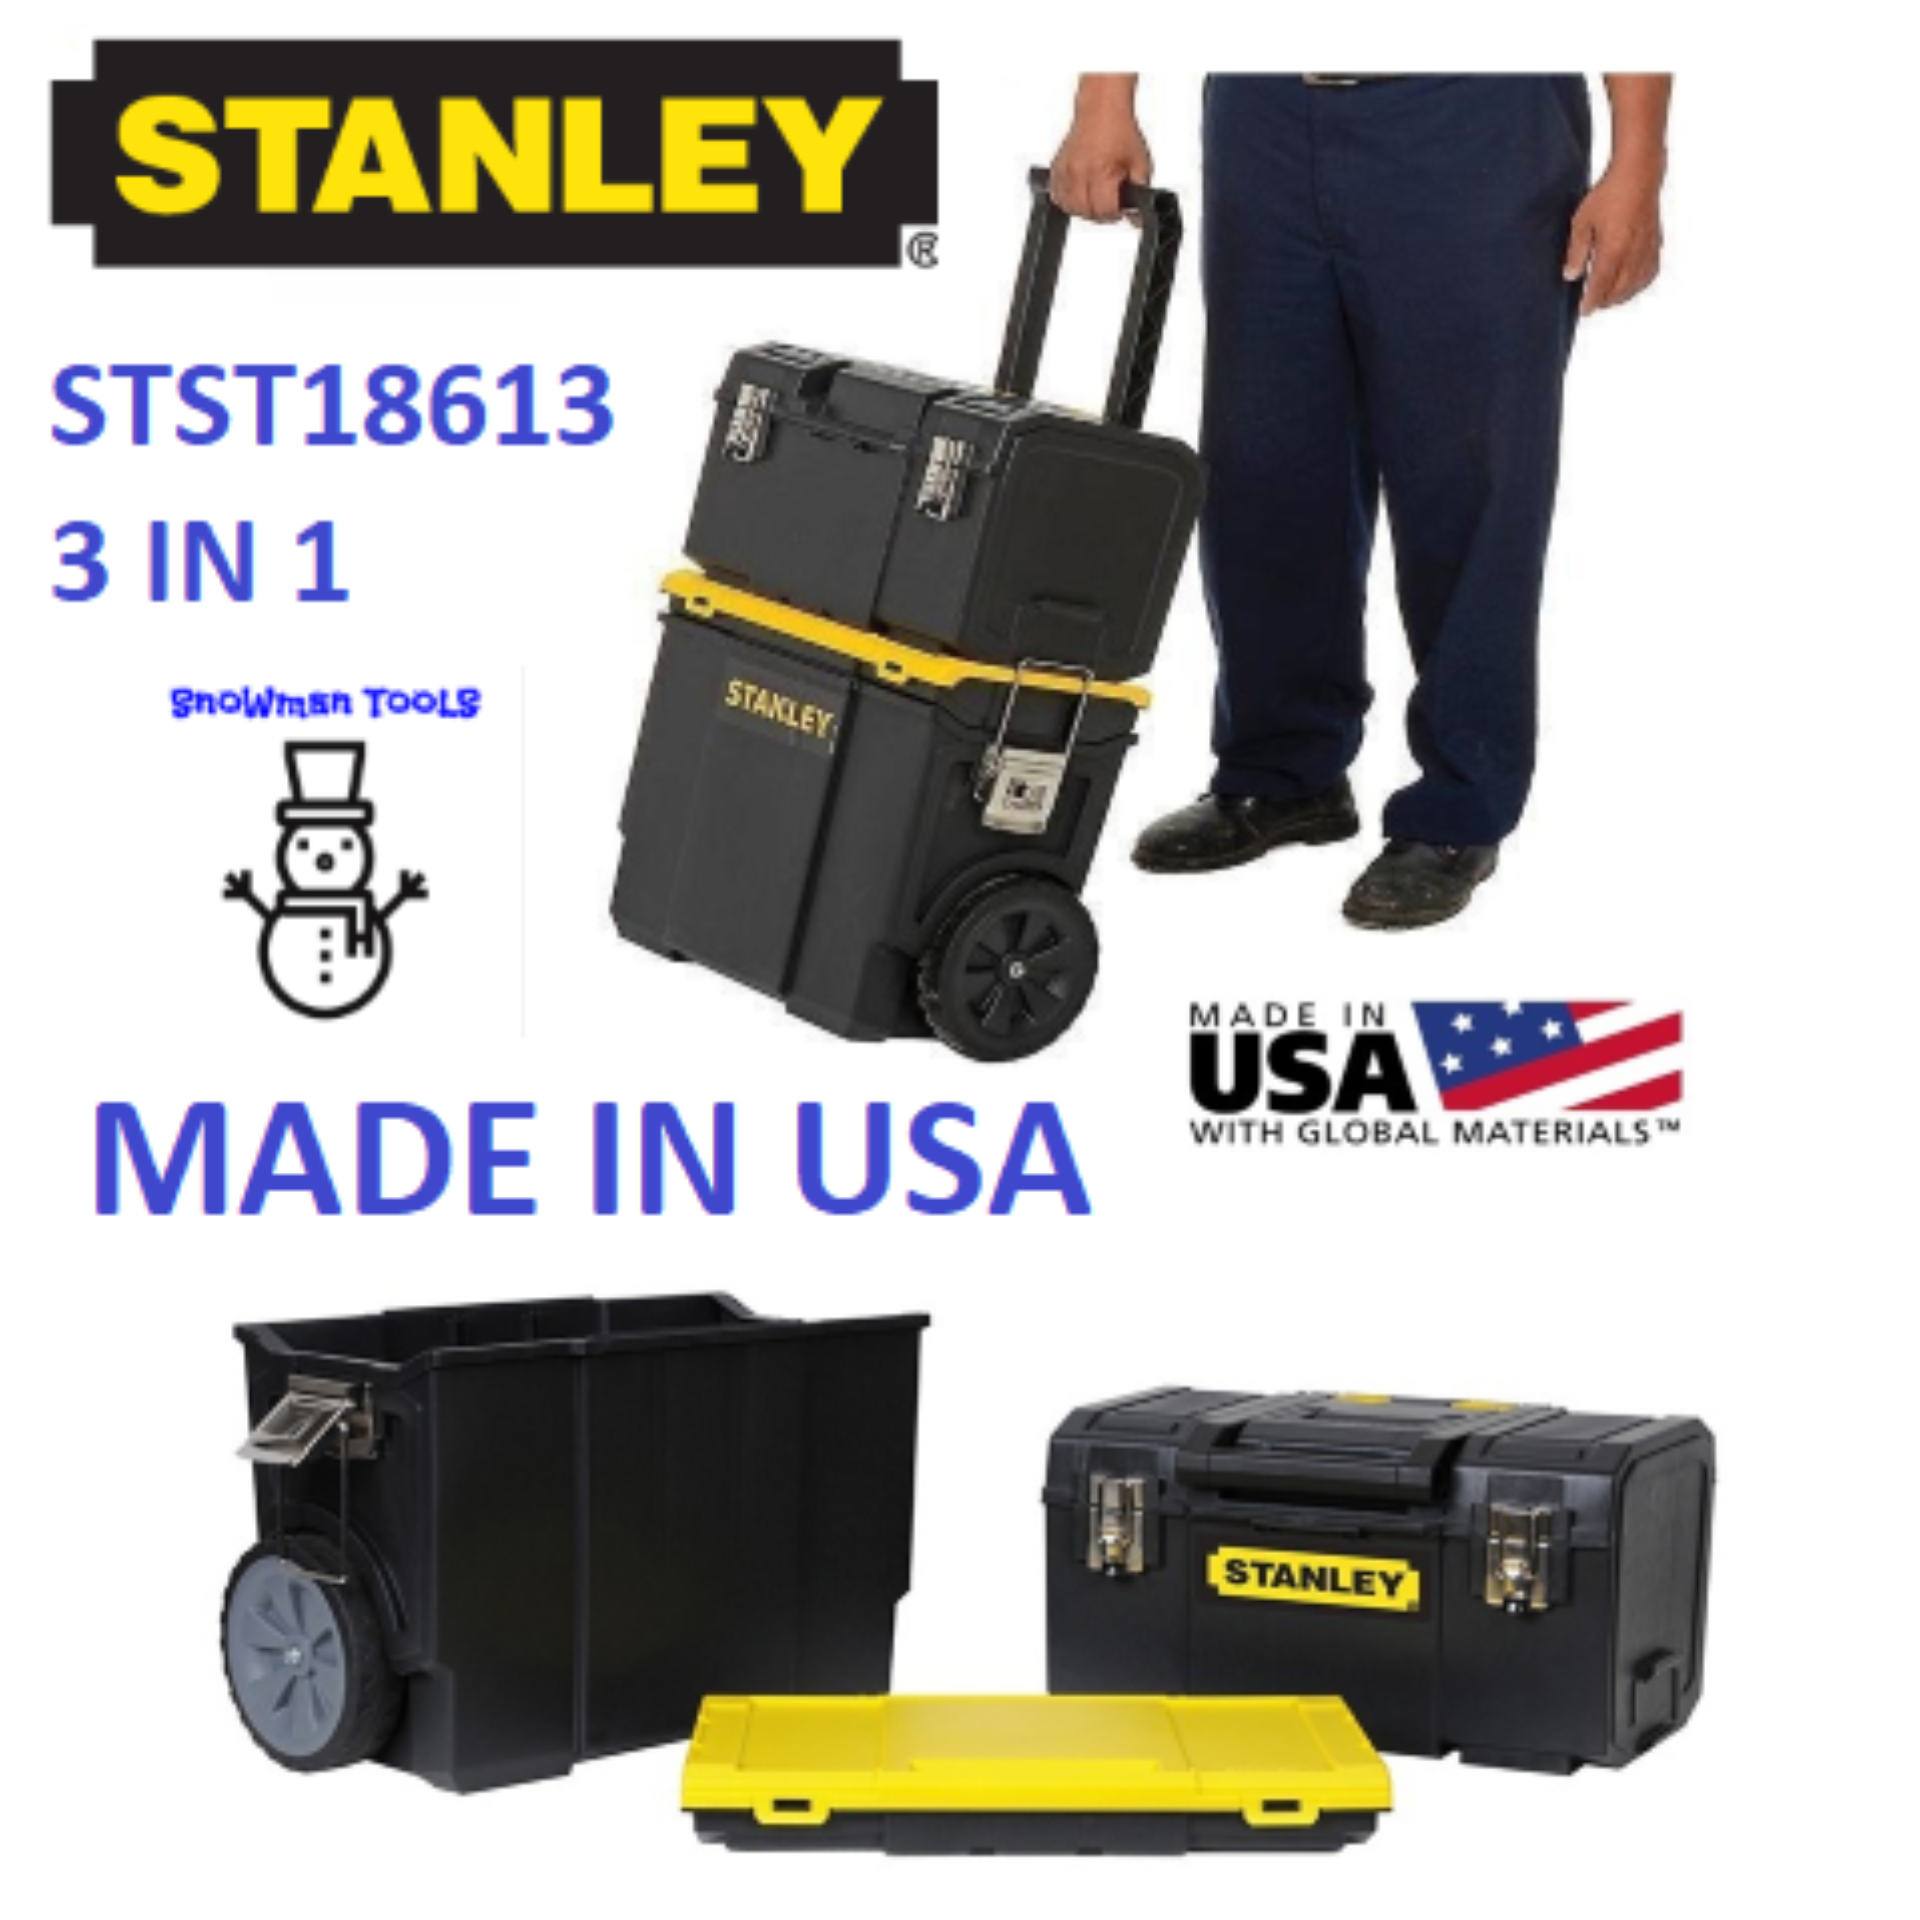 Stanley STST18613 3-in-1 Rolling WorkShop 